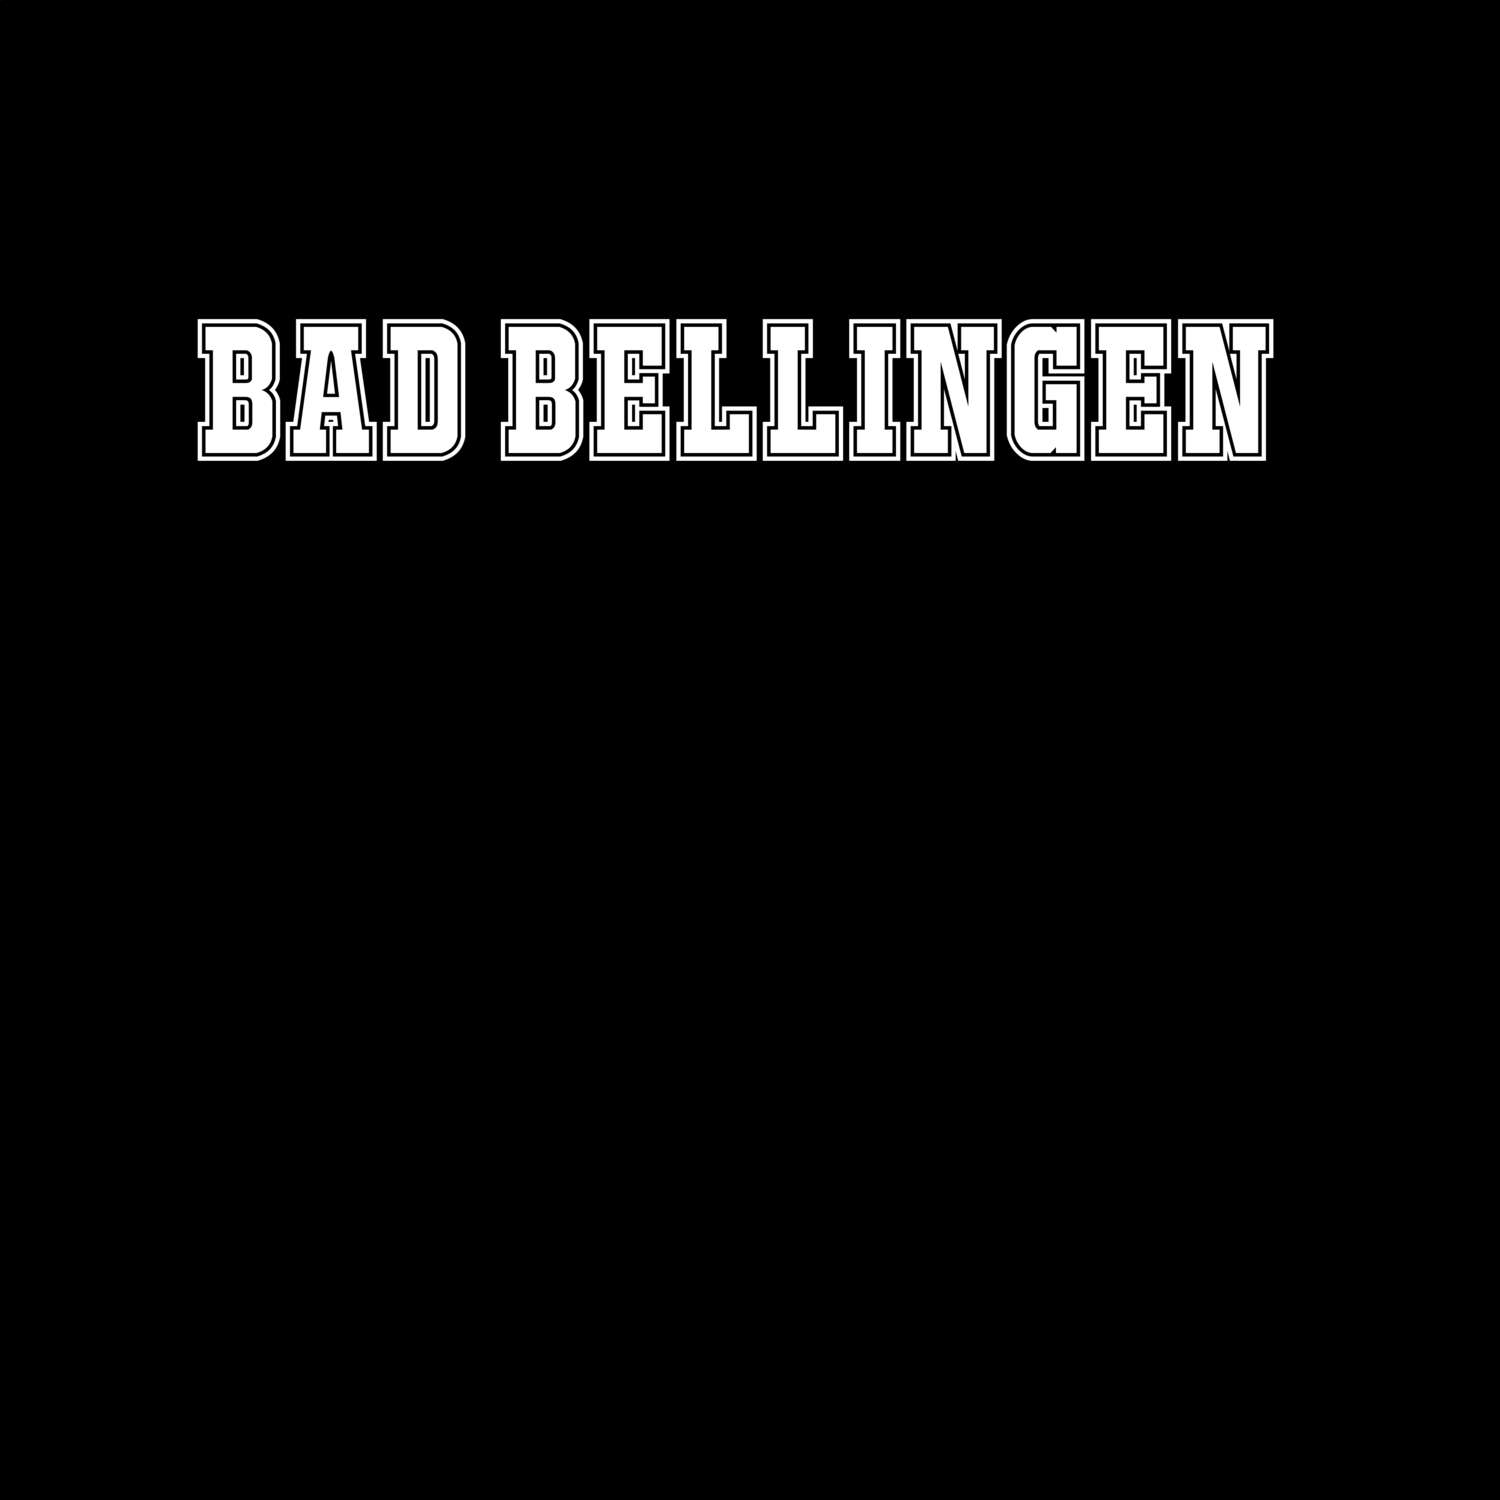 Bad Bellingen T-Shirt »Classic«